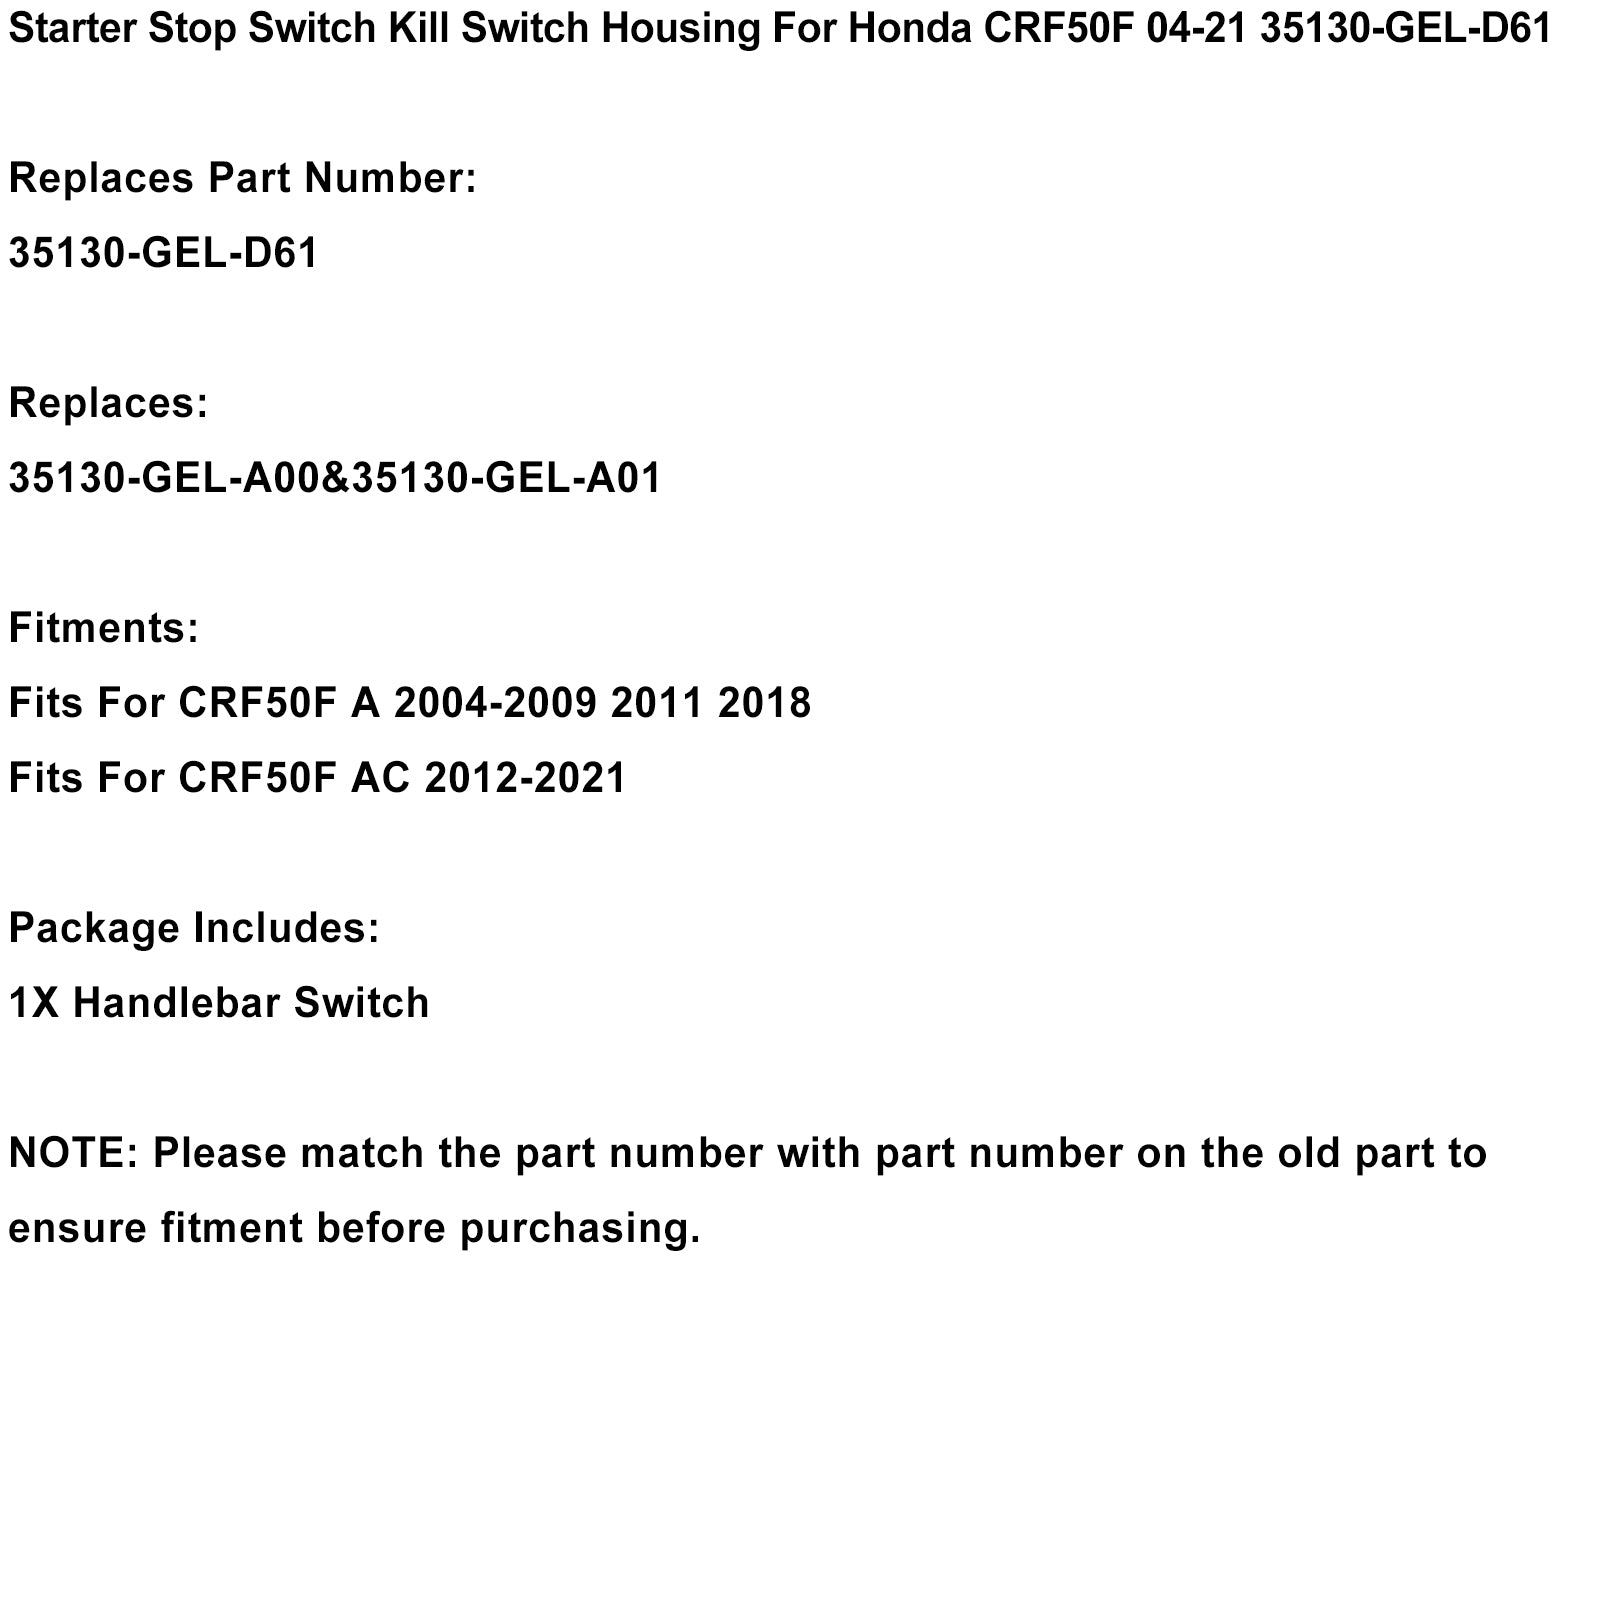 Starter Stop Switch Kill Switch Housing For Honda CRF50F 04-21 35130-GEL-D61